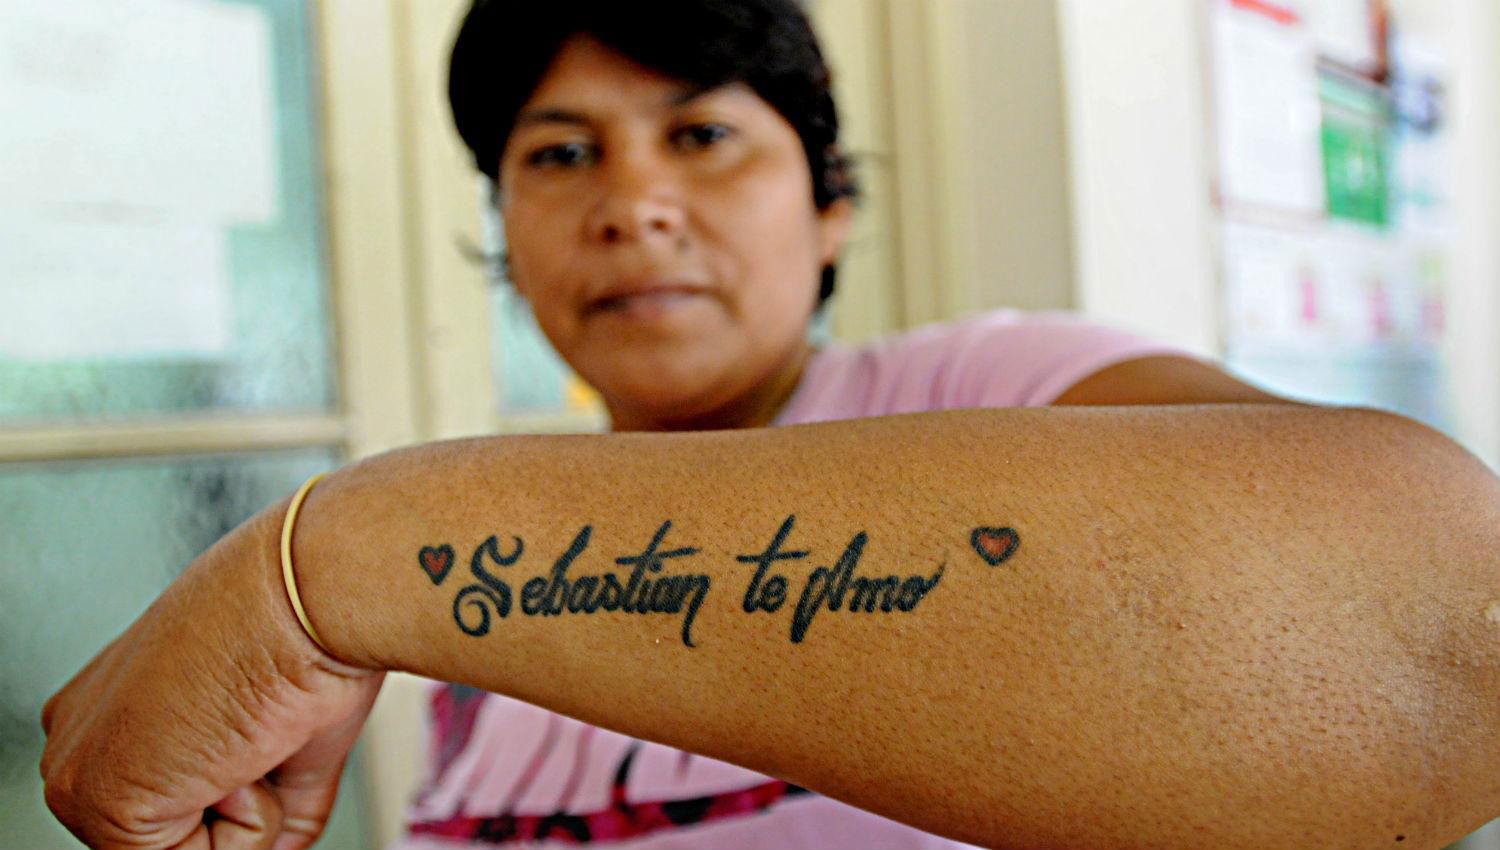 AMOR INCONDICIONAL. Silvia se tatuó el nombre de su pareja. ARCHIVO LA GACETA / FRANCO VERA